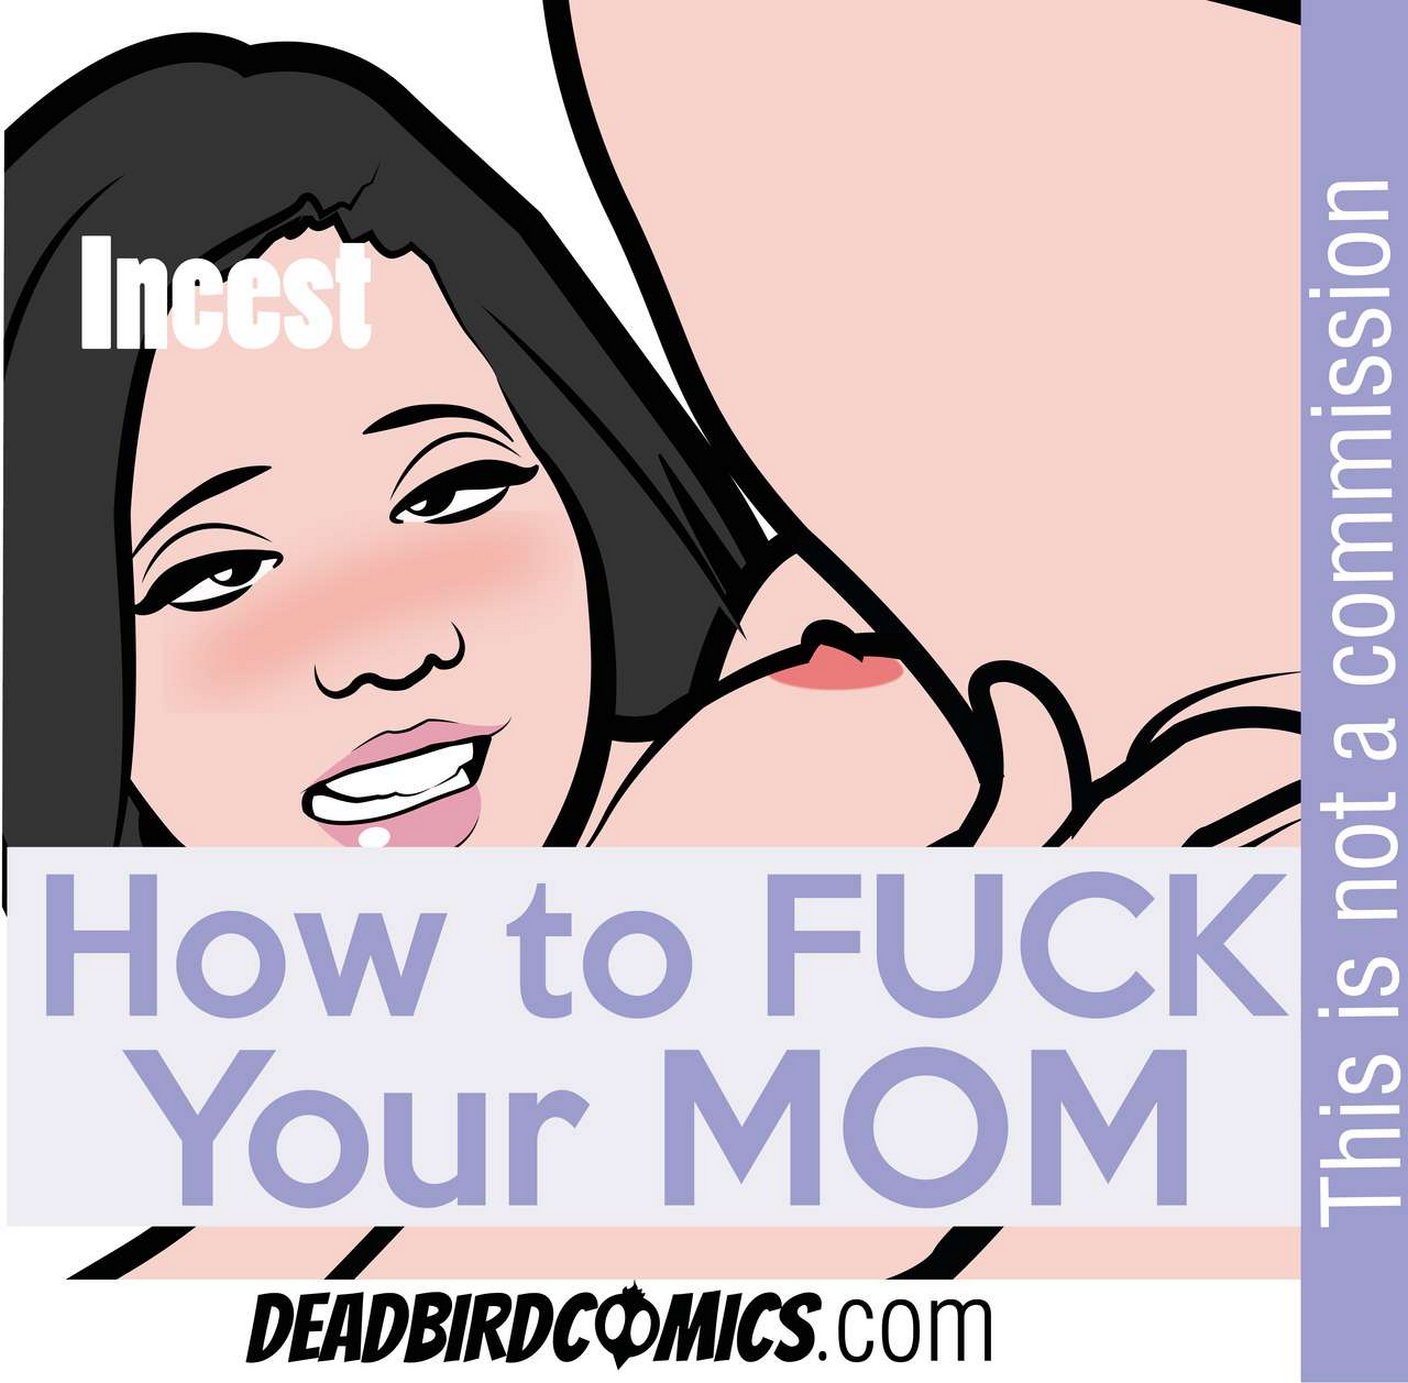 Deadbird - How to Fuck Your Mom